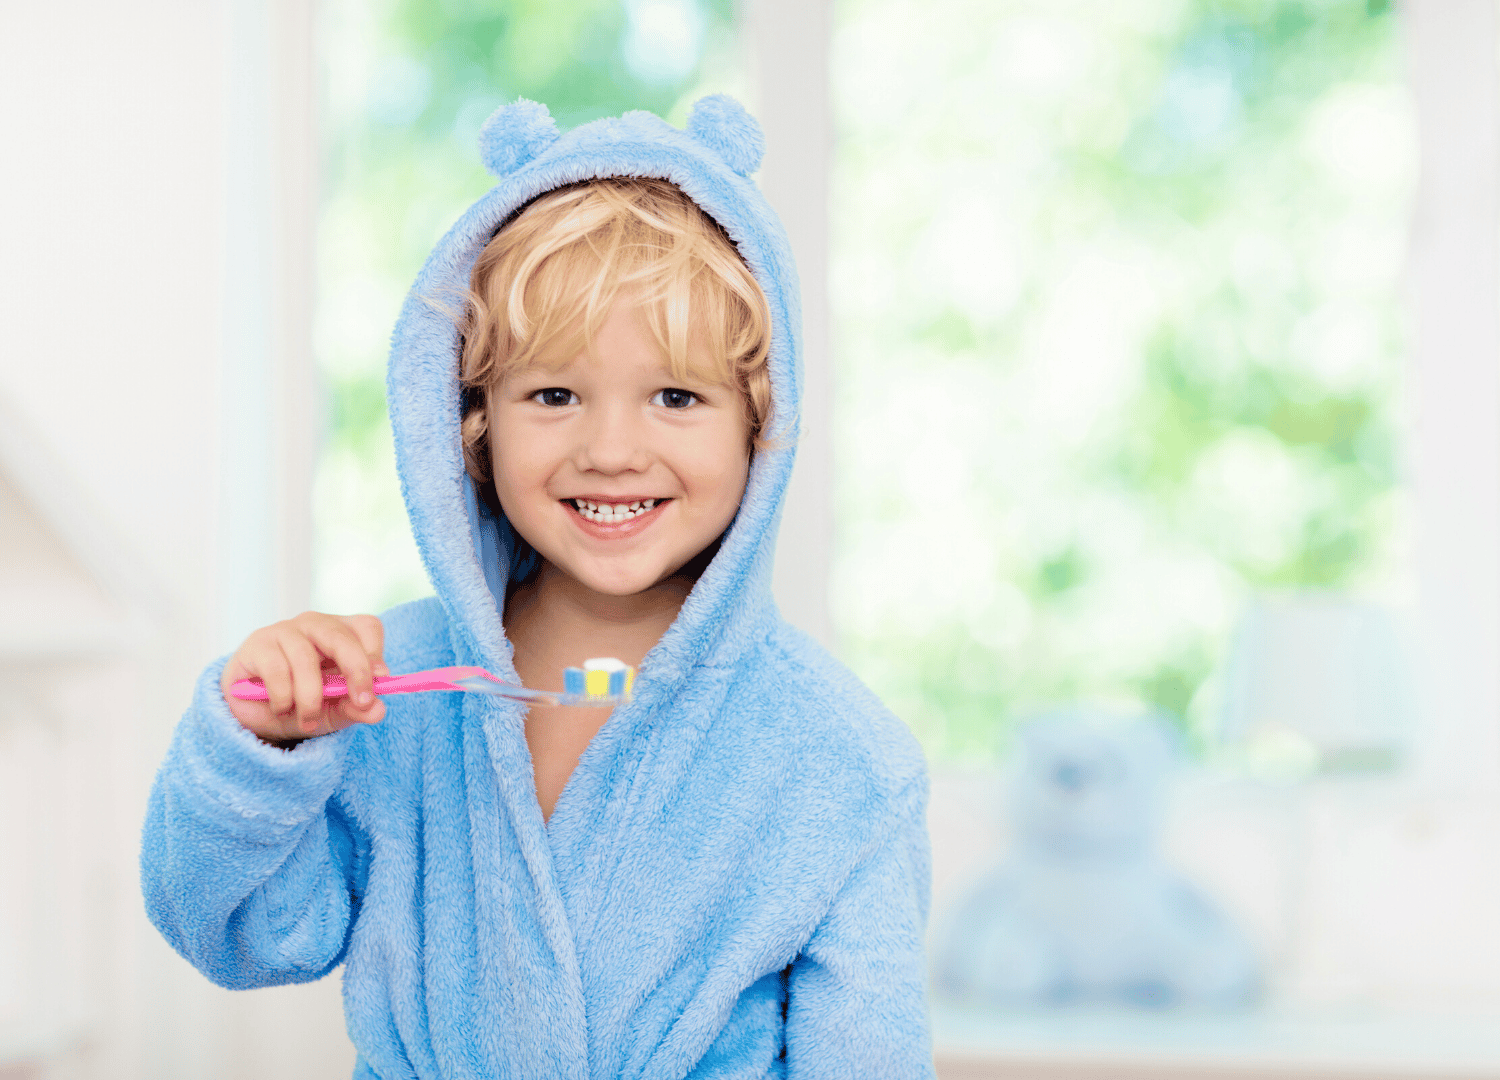 Smiling child holding toothbrush